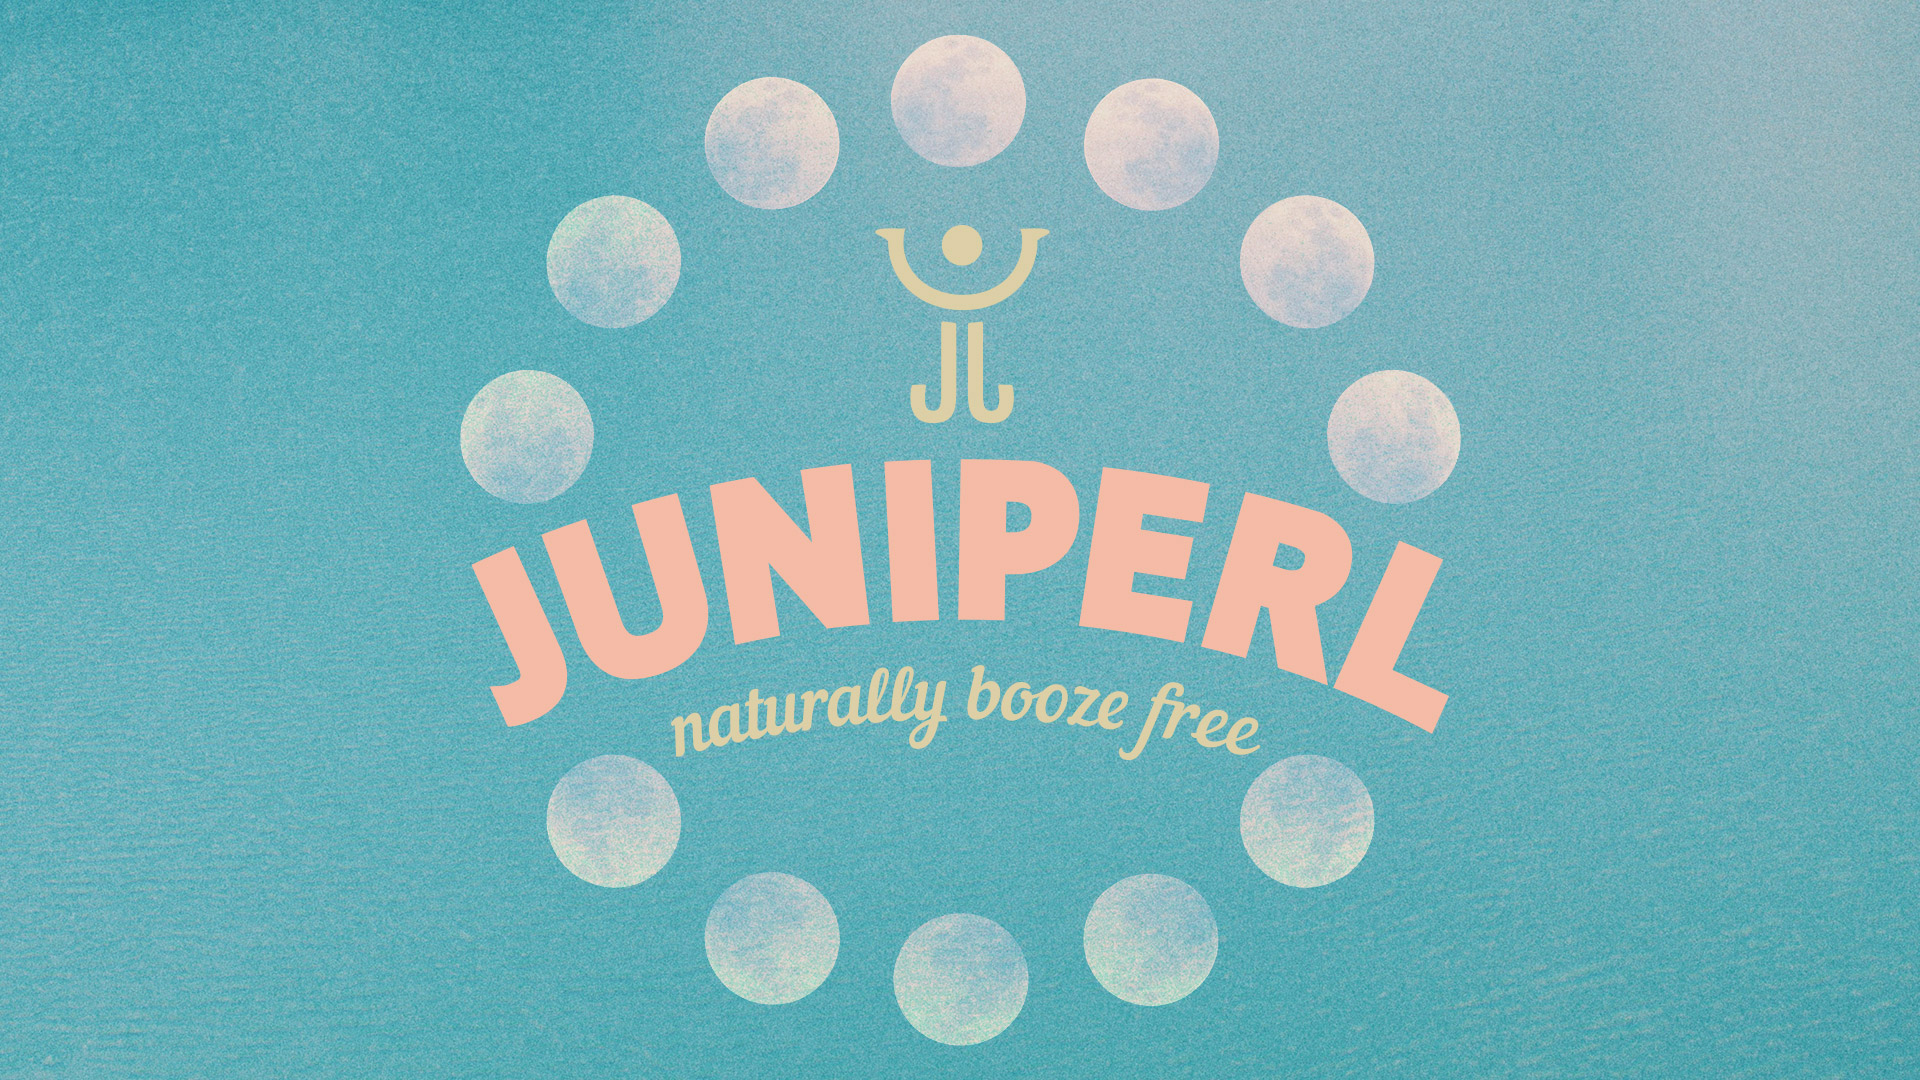 Juniperl the Non-Alcoholic Gin for Health-Conscious Millennials